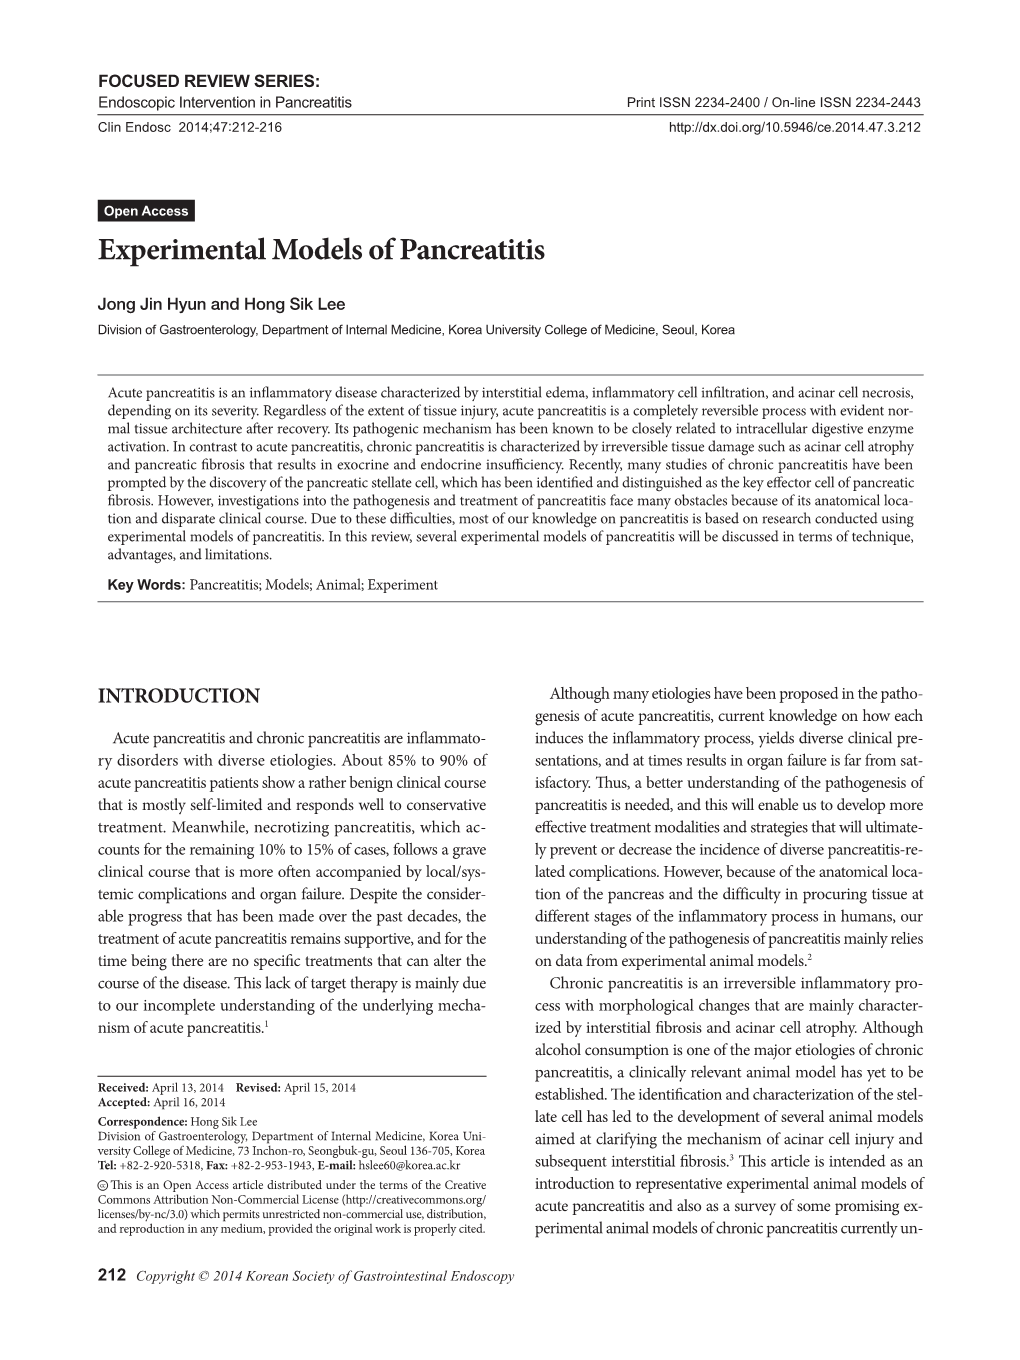 Experimental Models of Pancreatitis